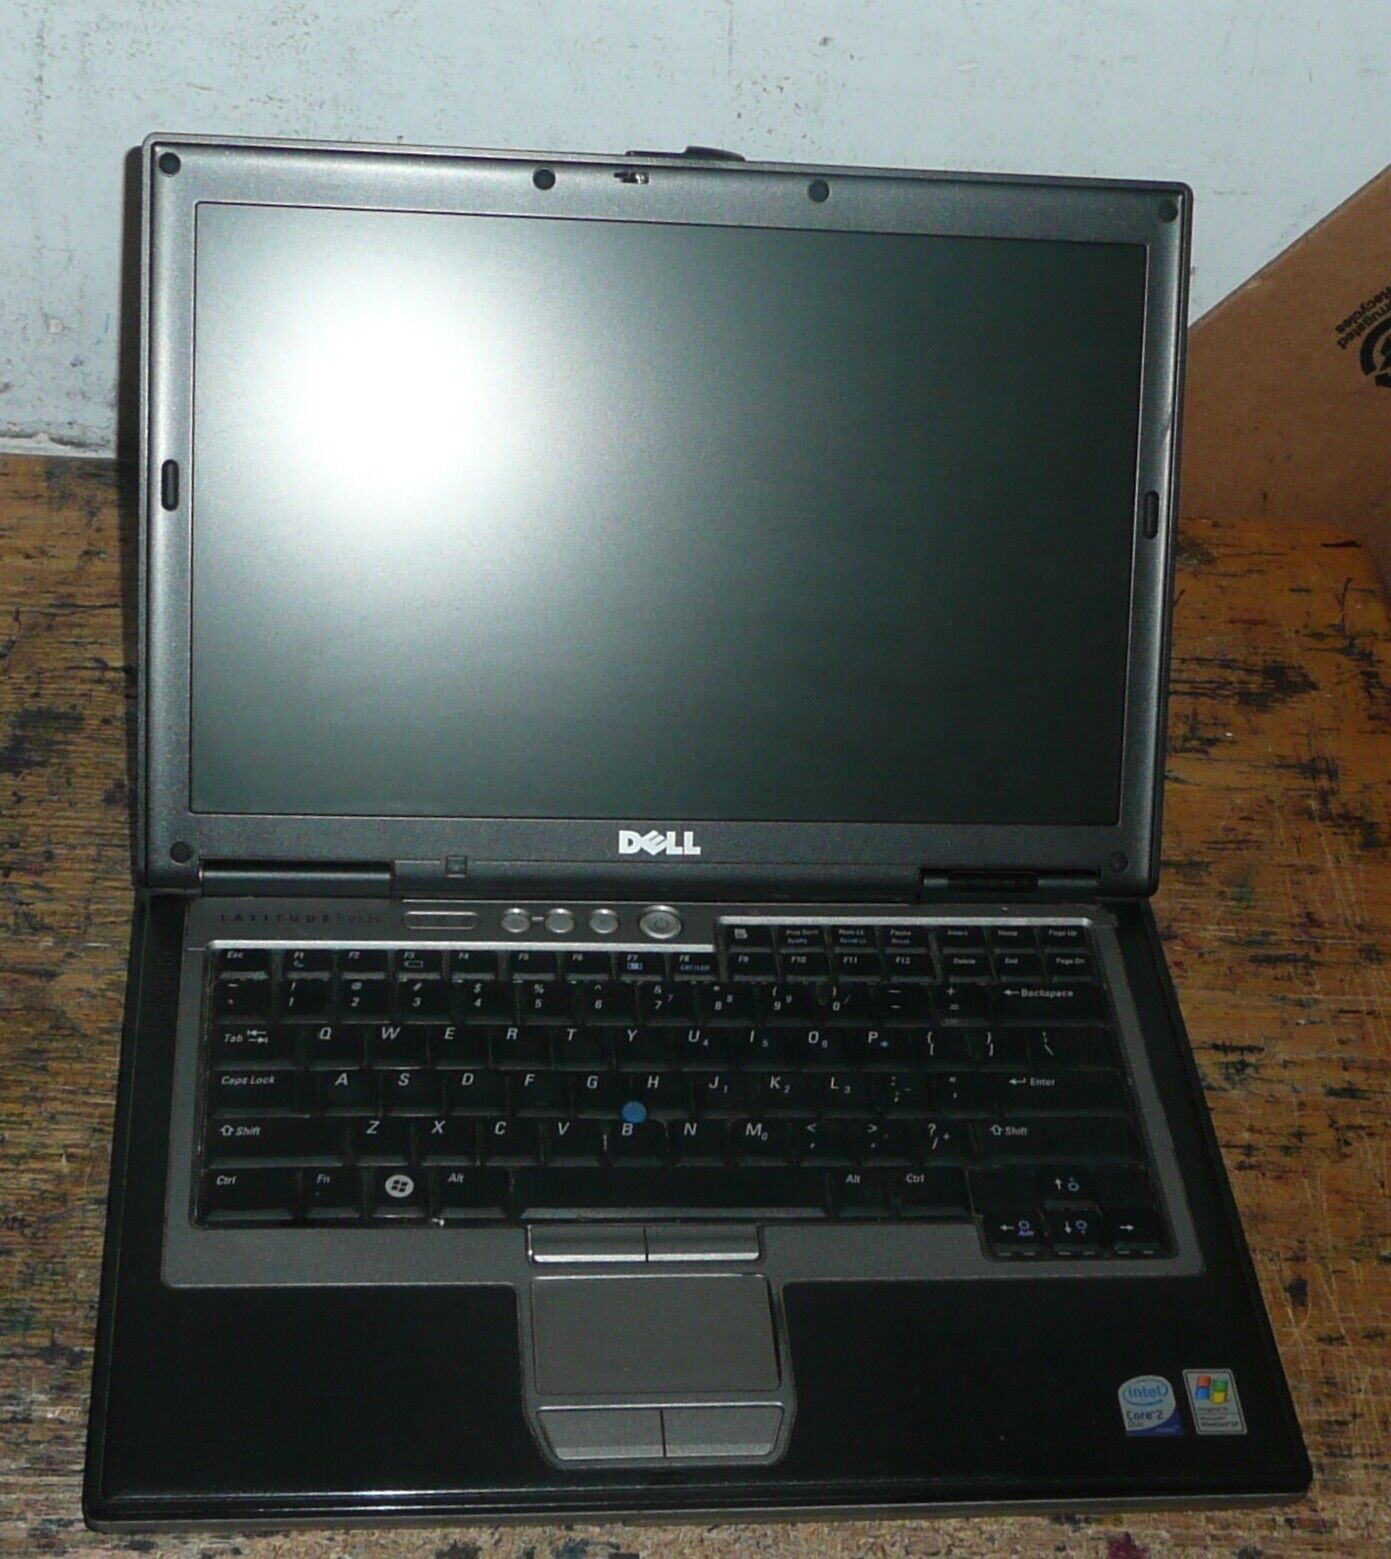 Dell Latitude D630 Laptop Computer 2GHz C2D 160GB HD WINDOWS XP - Serial Port